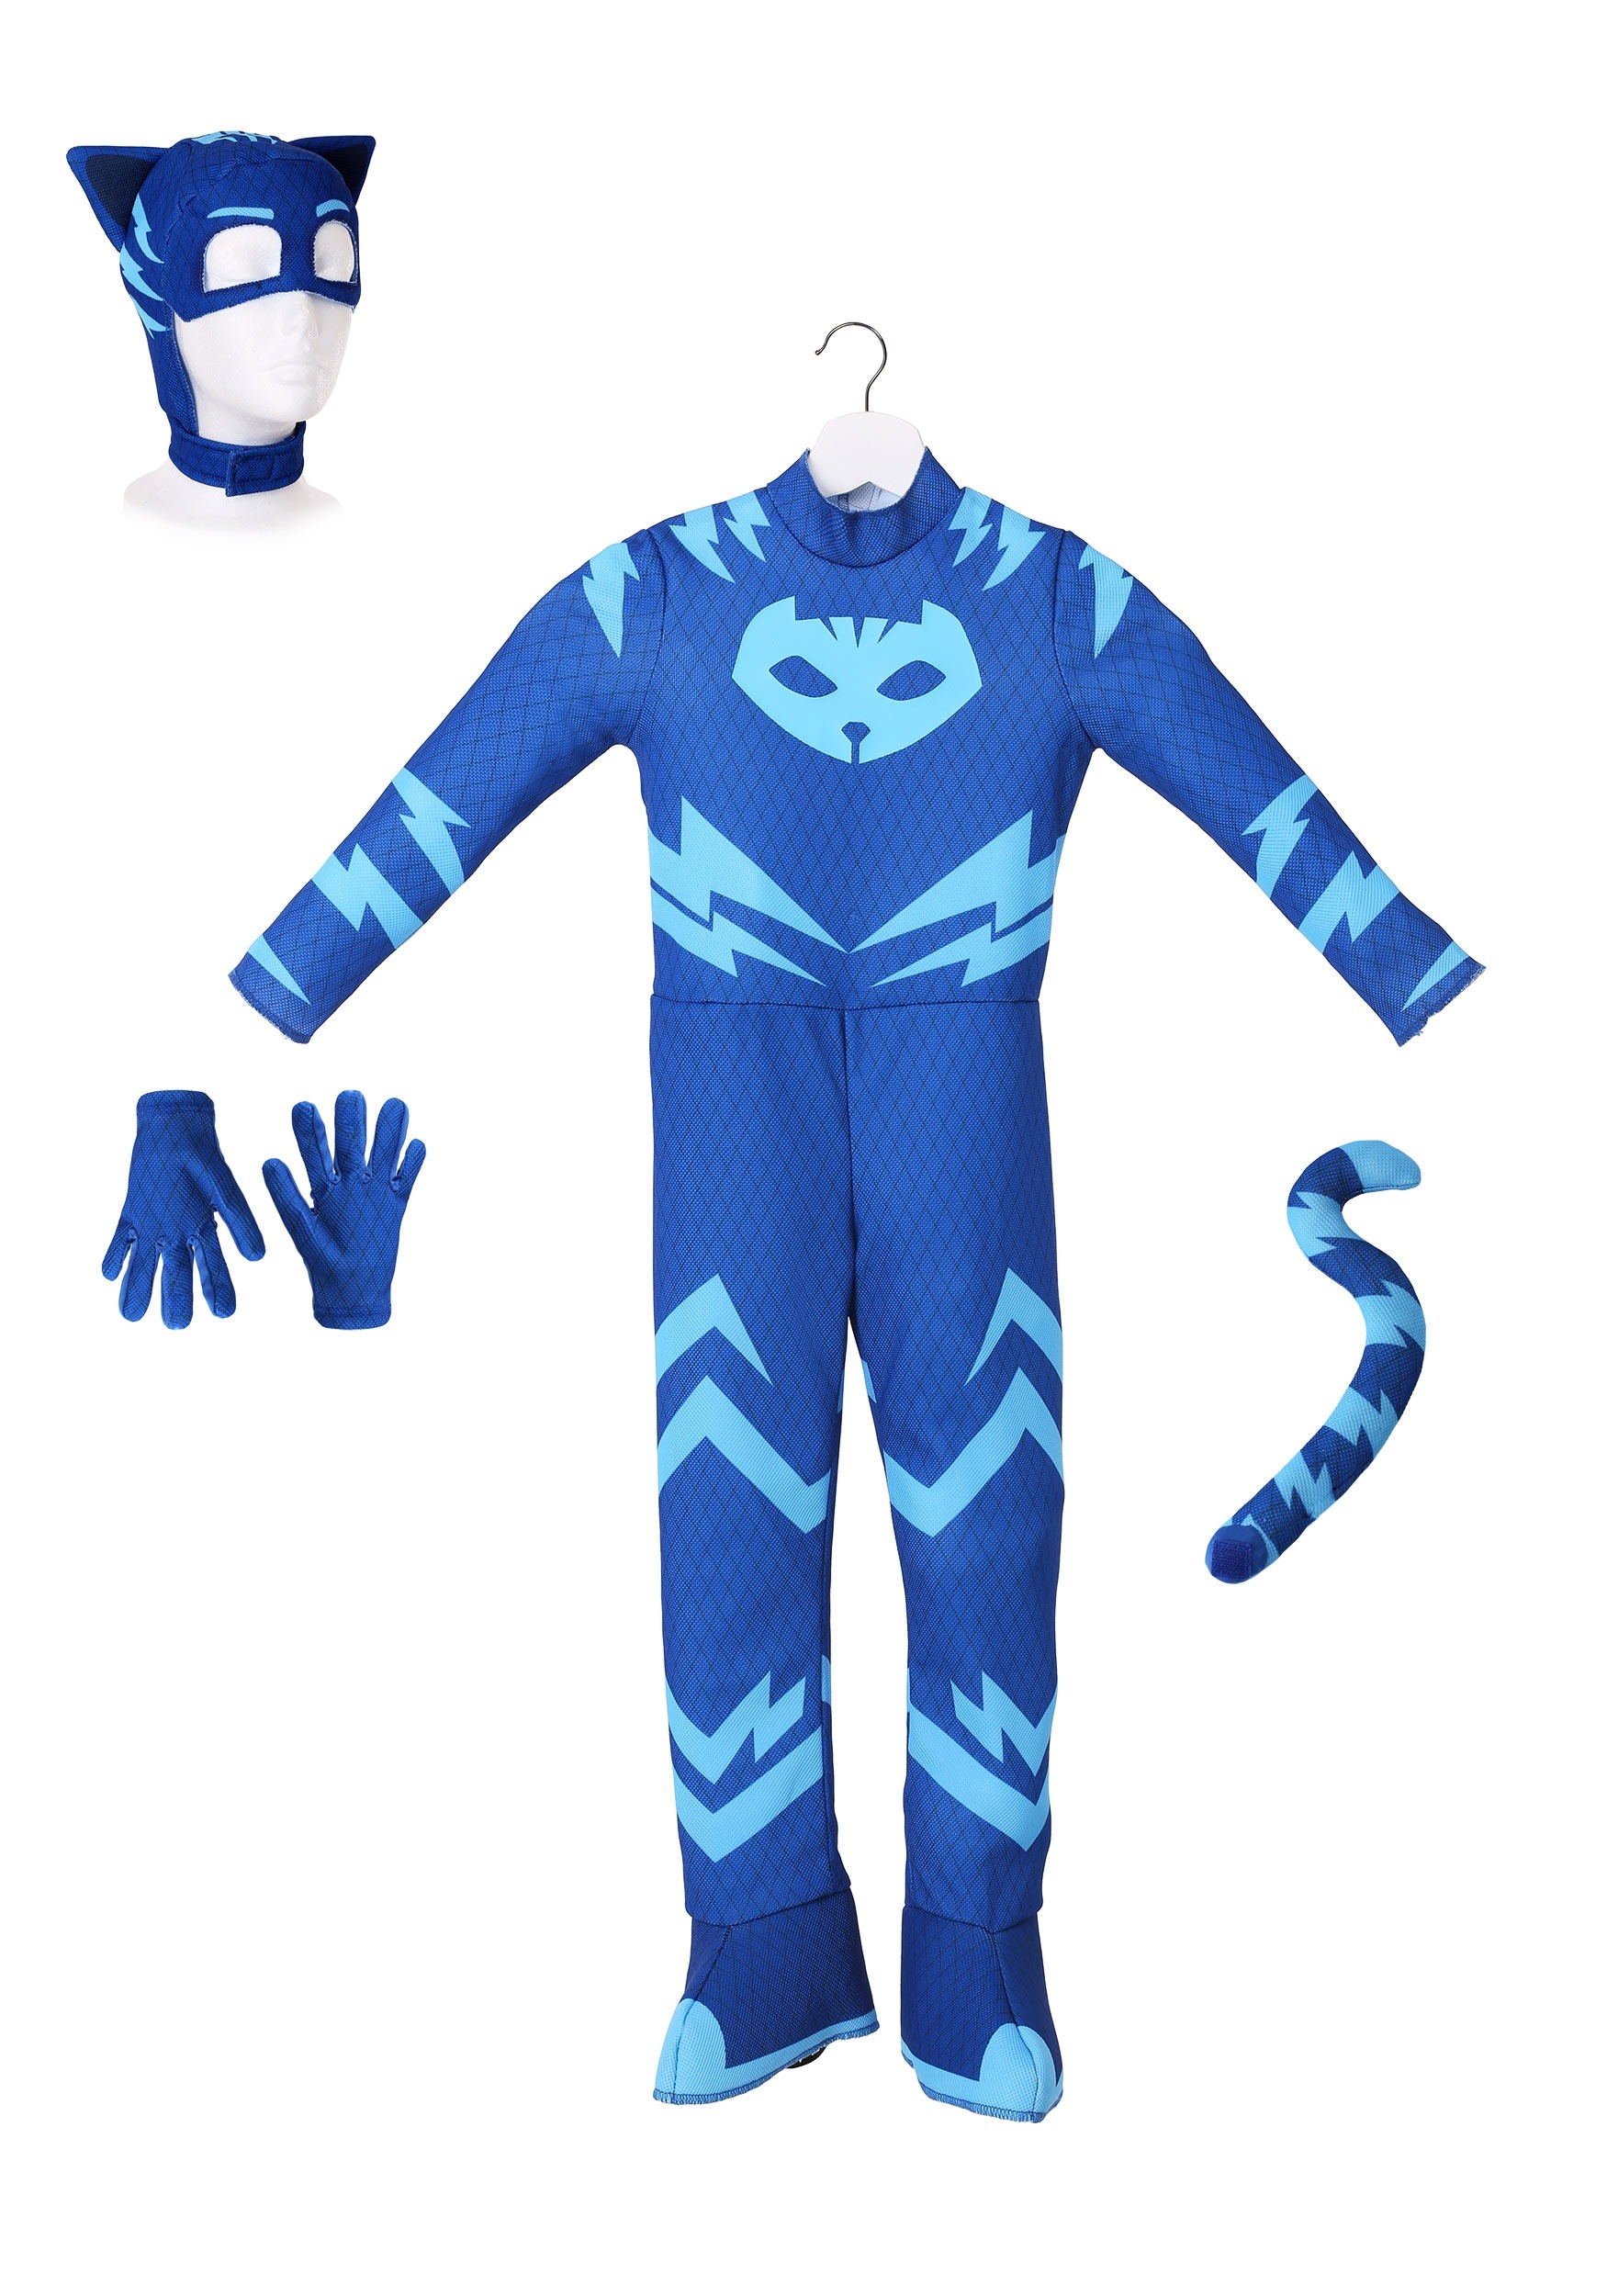 Deluxe PJ Masks Cat Boy Costume